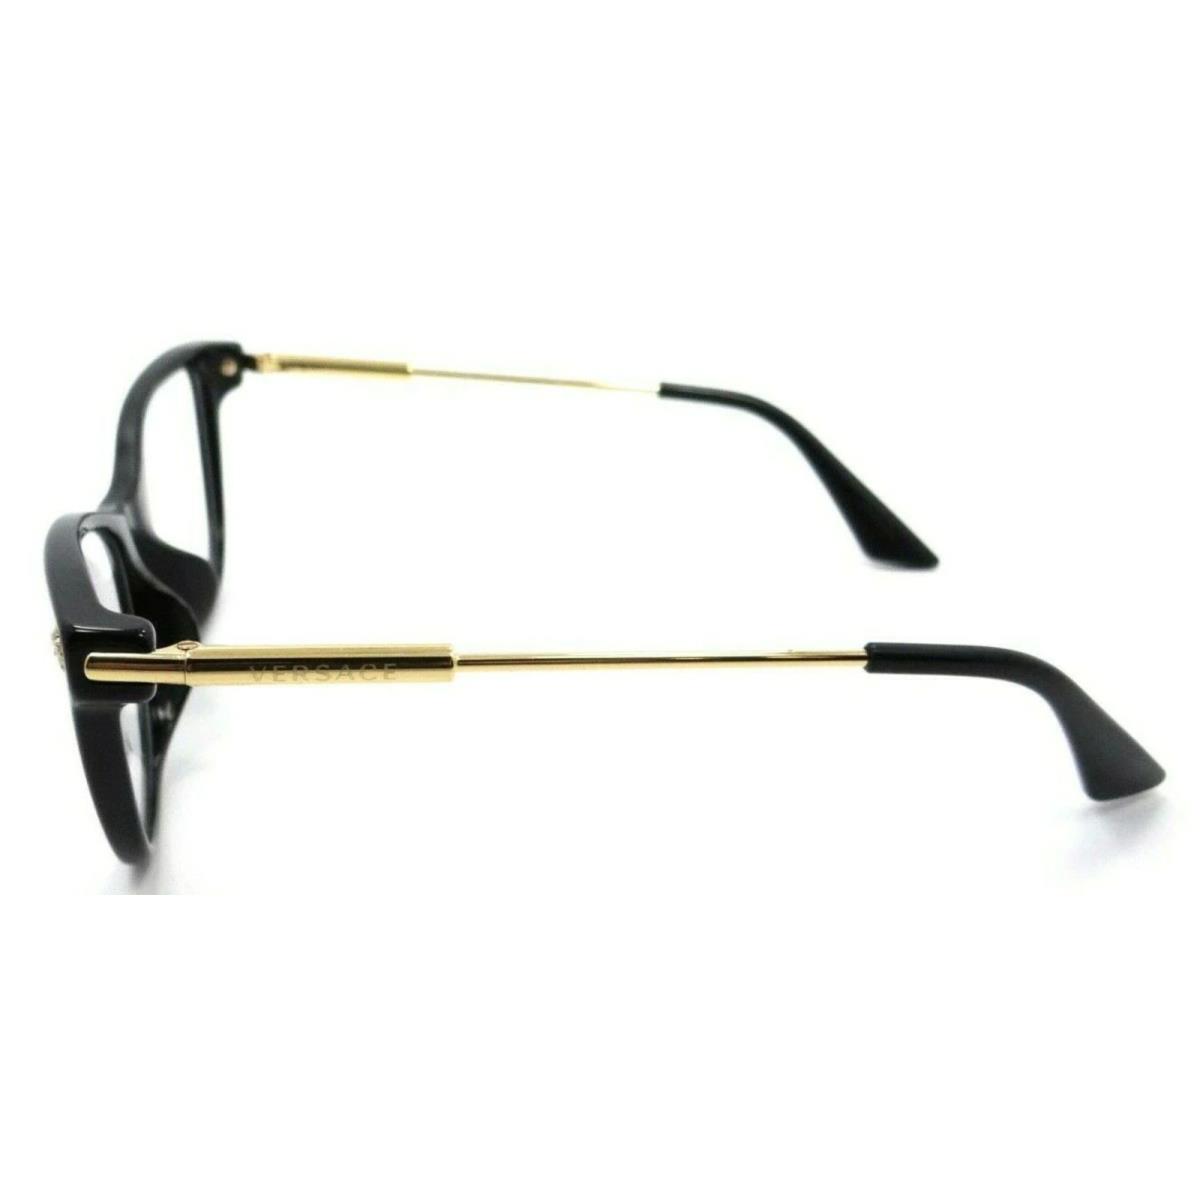 Versace Eyeglasses Mod. 3309 GB1 54-18 140 Black Gold Frames Medusa Logos - Black & Gold, Frame: Black & Gold, Lens: